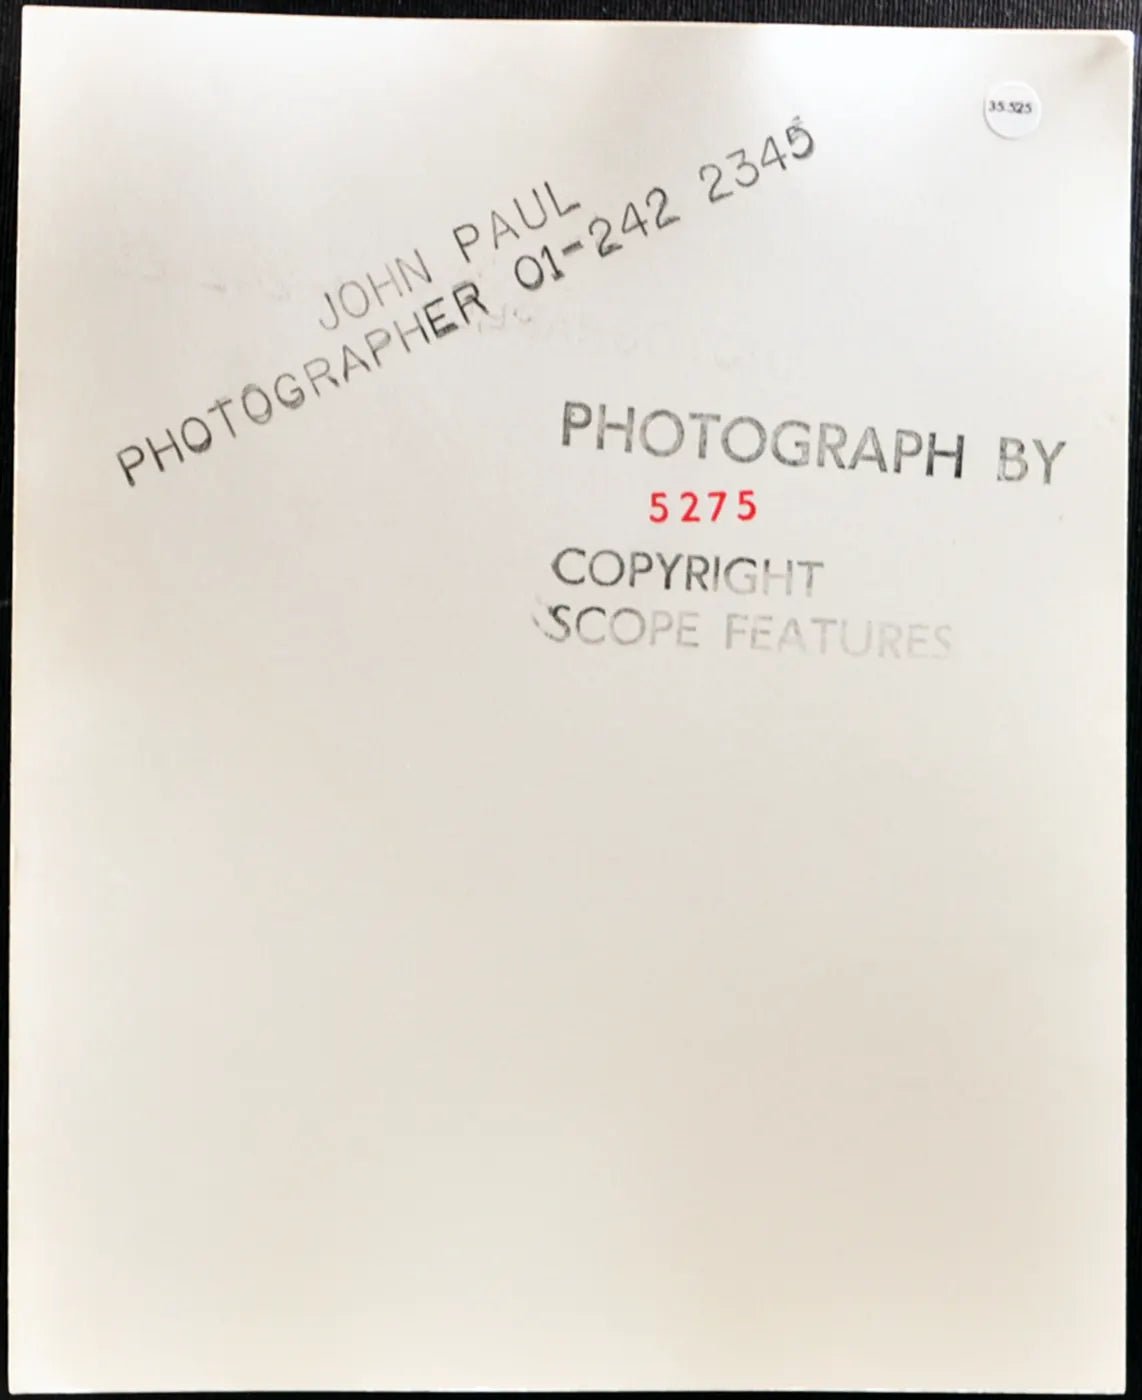 Gillian Duxbury Modella anni 80 Ft 35525 - Stampa 20x25 cm - Farabola Stampa ai sali d'argento